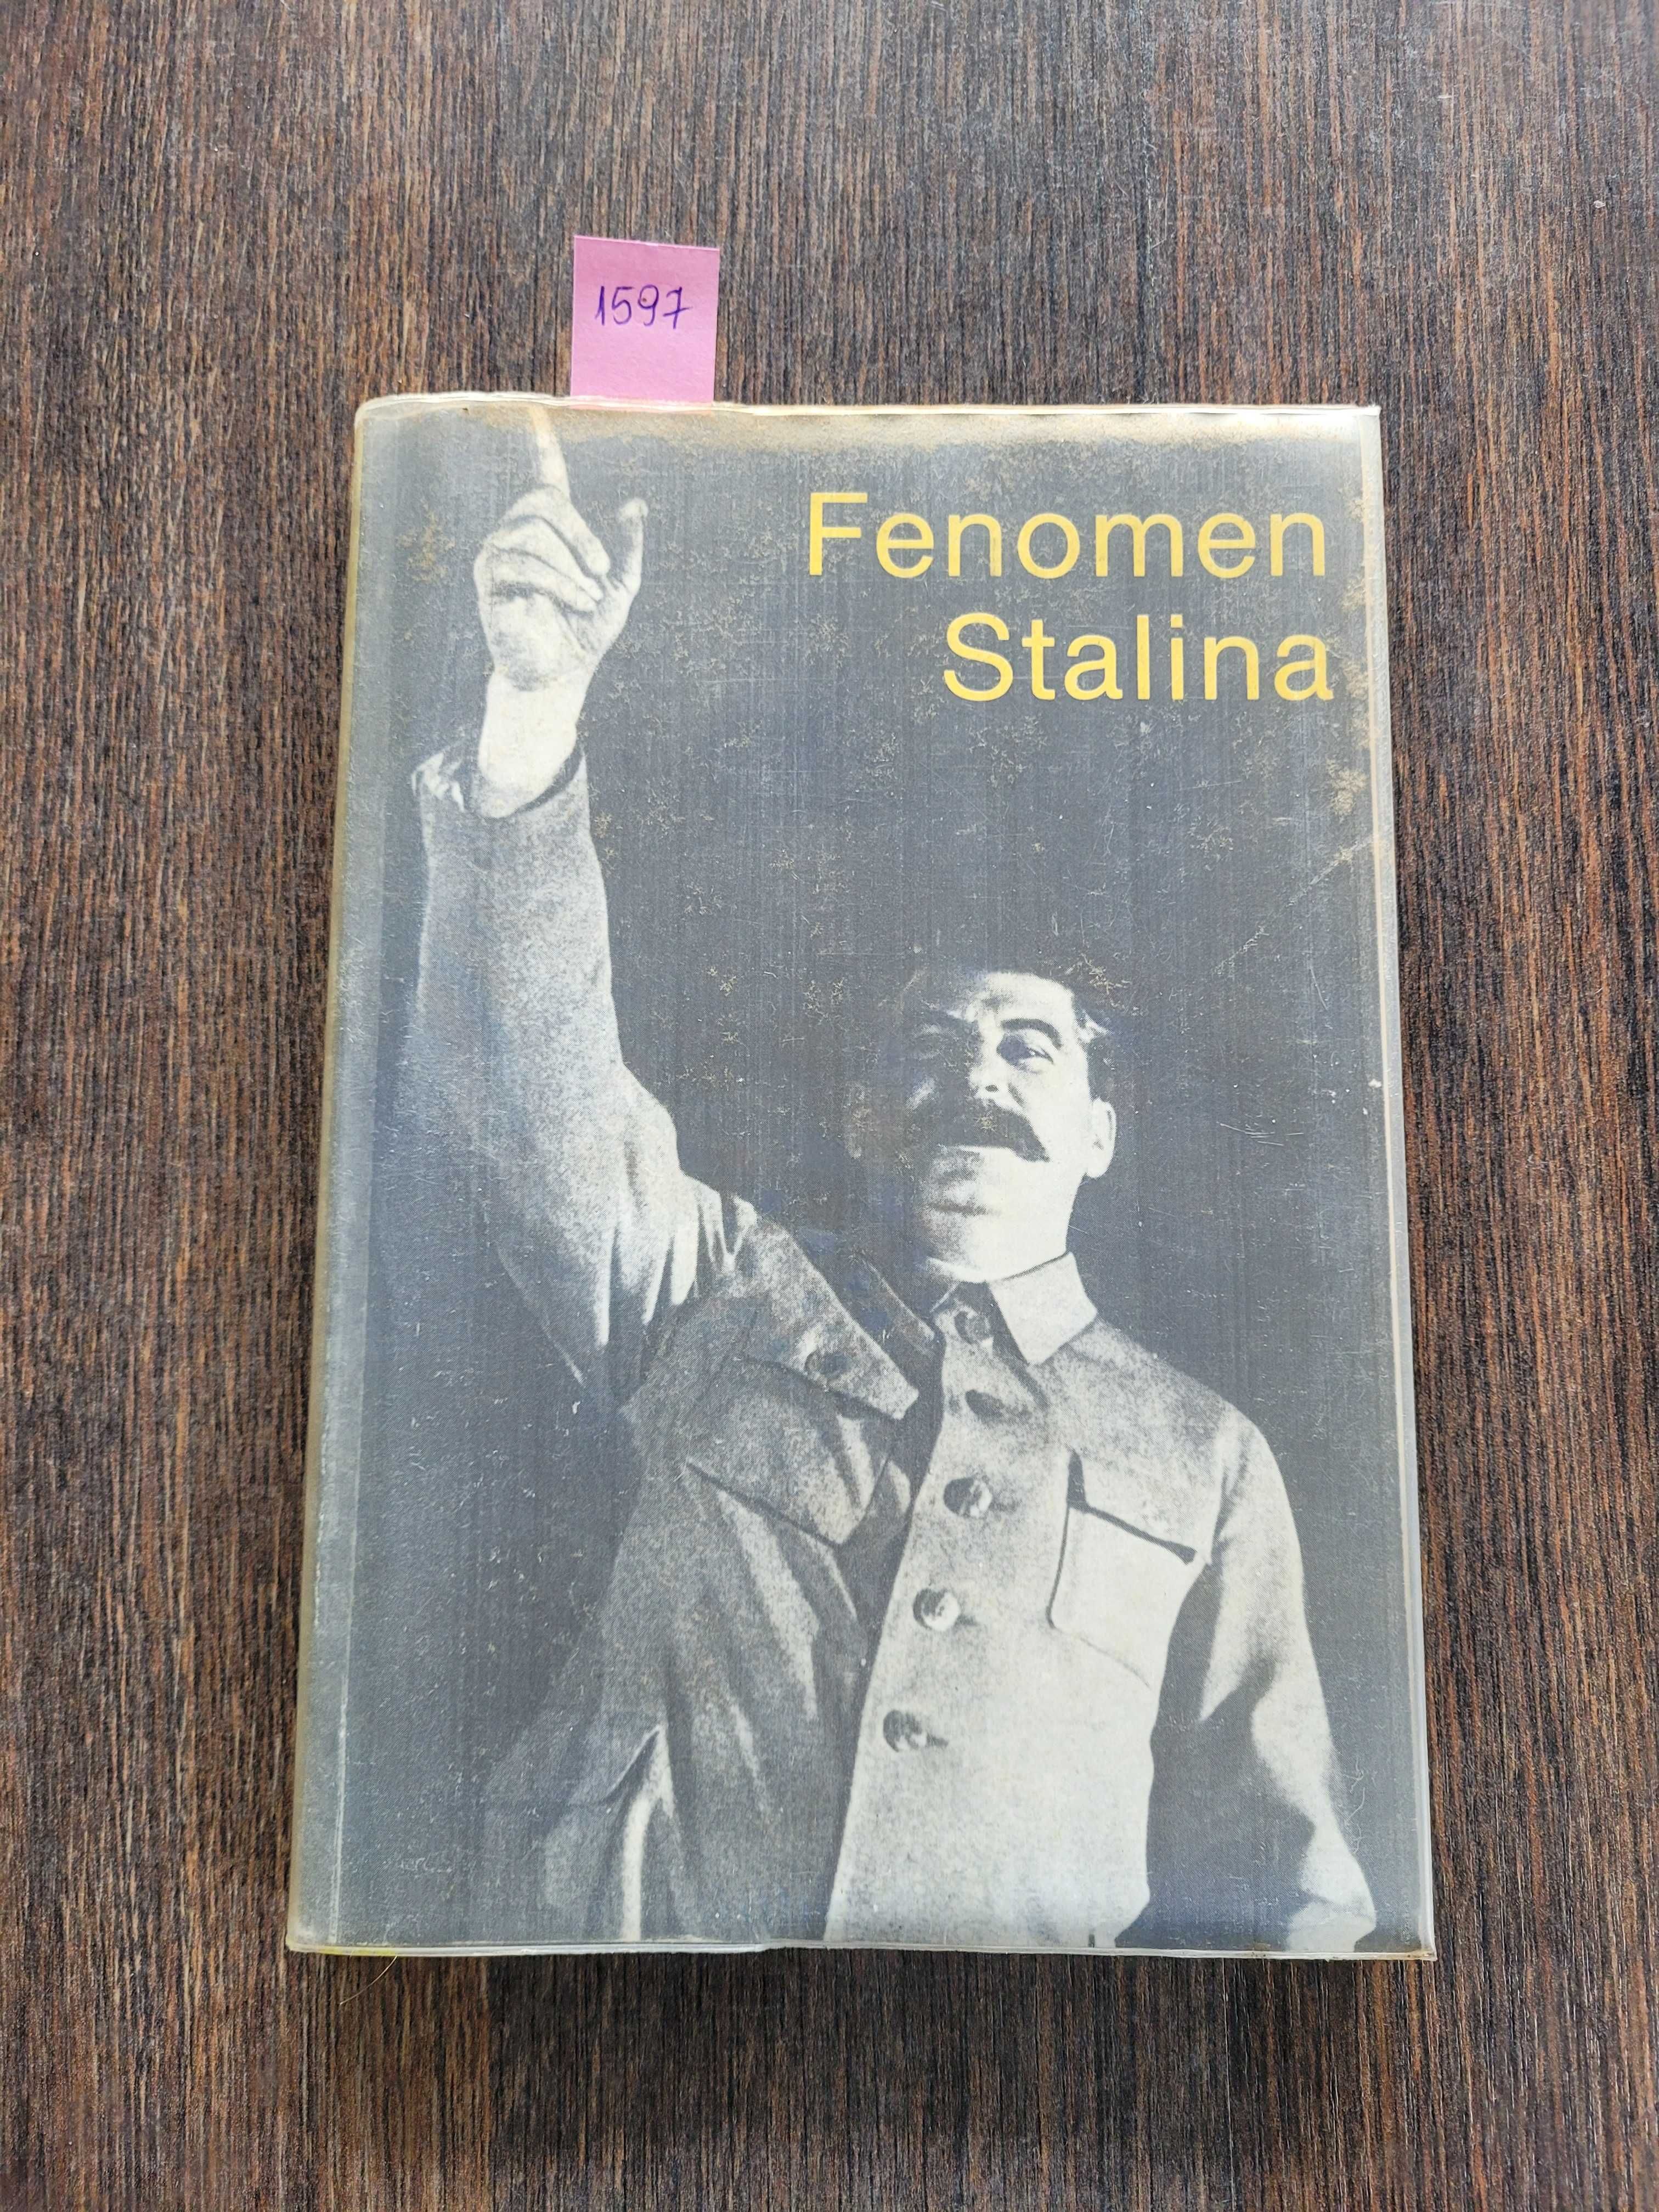 1597. "Fenomen Stalina" praca zbiorowa